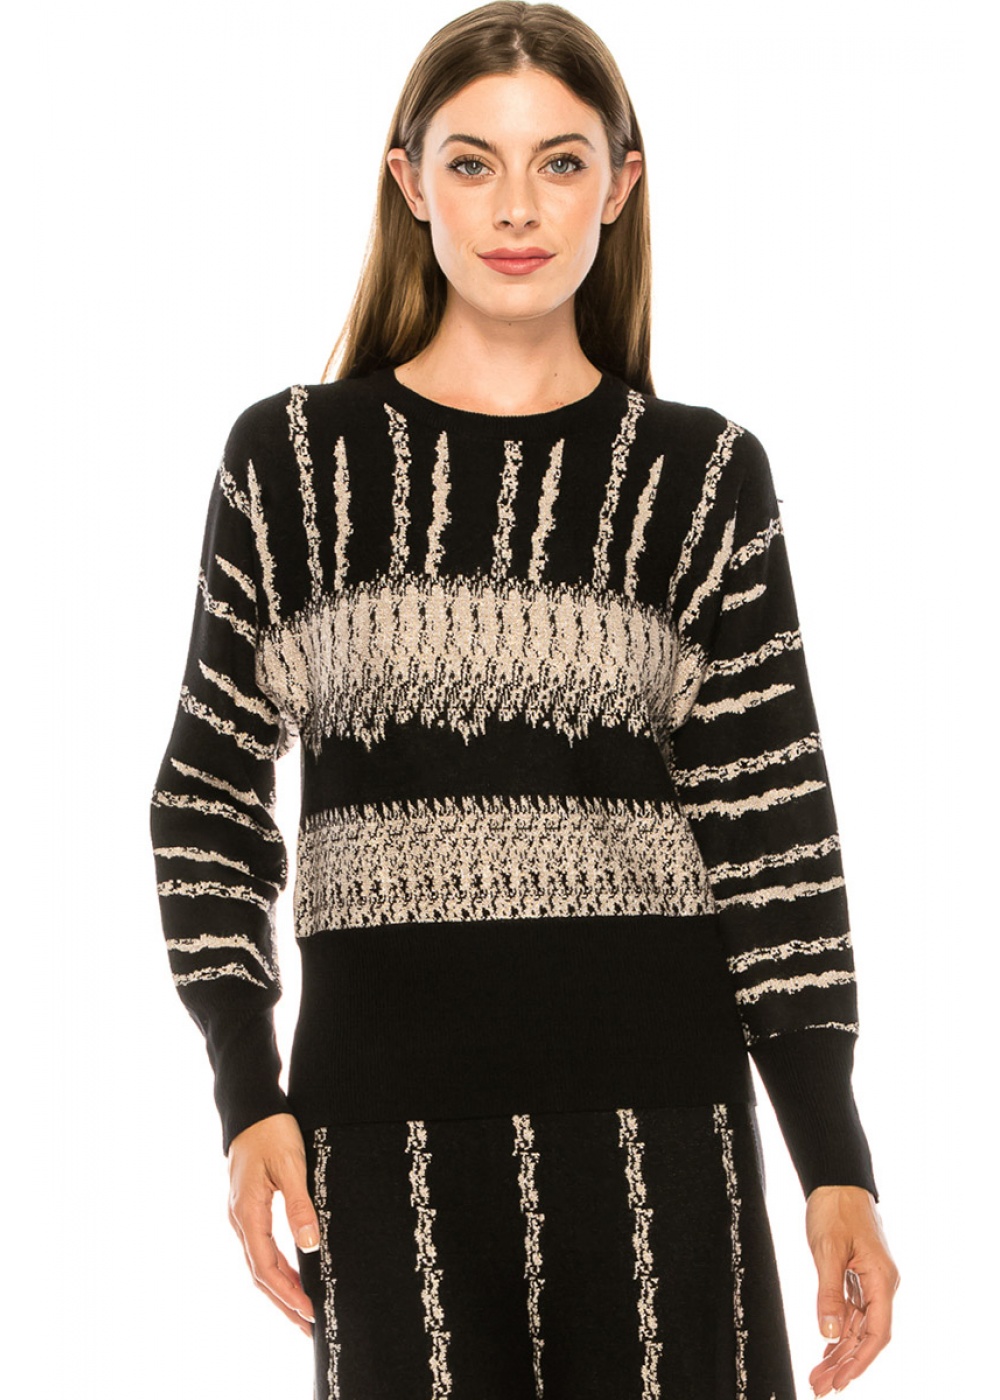 Black and pink lurex sweater